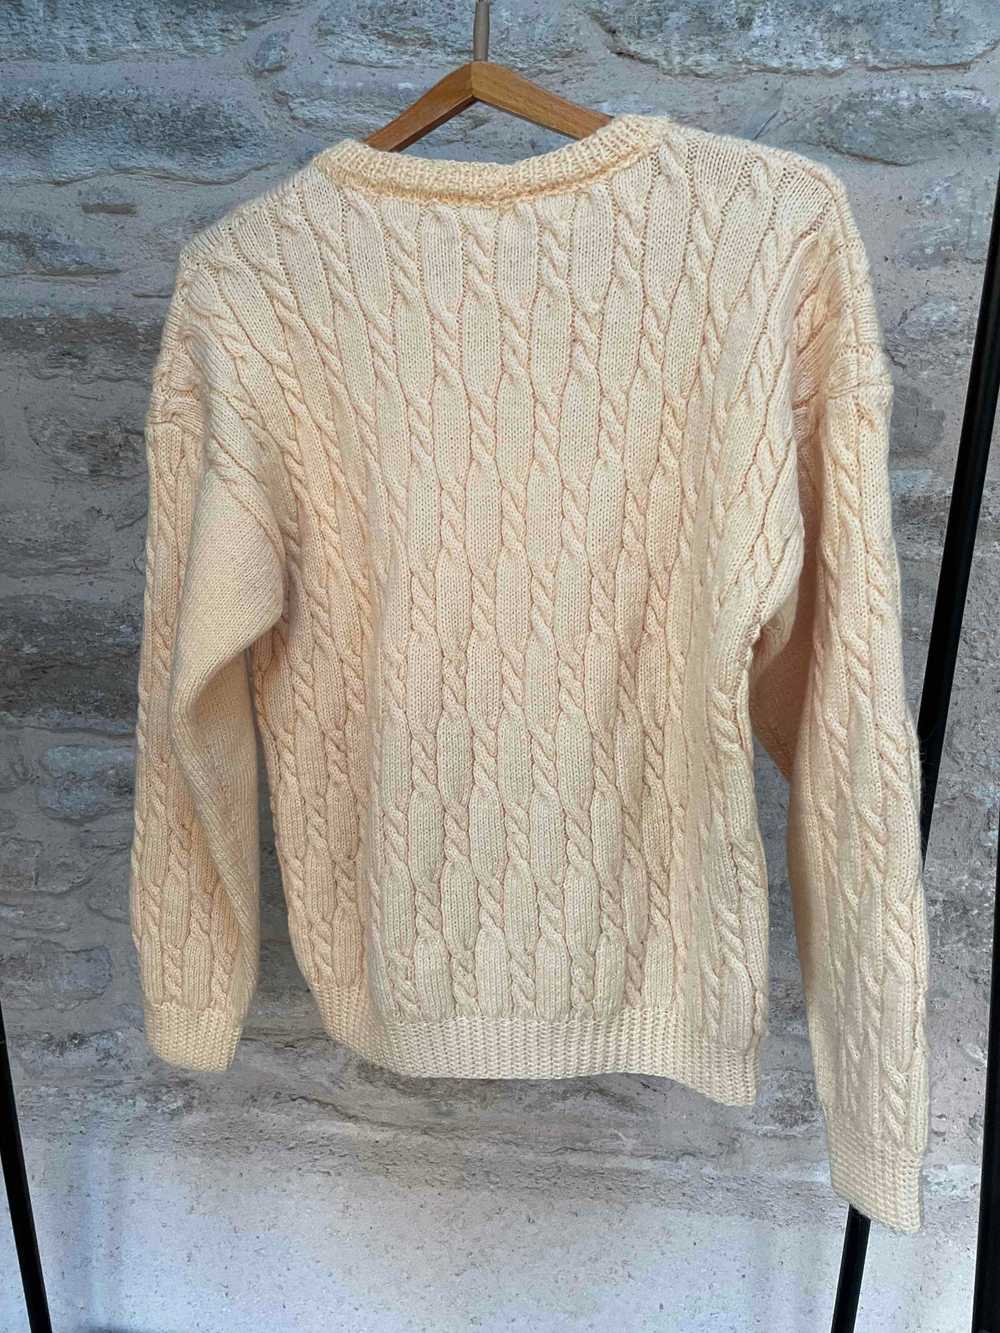 Woolen sweater - Wool sweater, braided, hand knit… - image 4